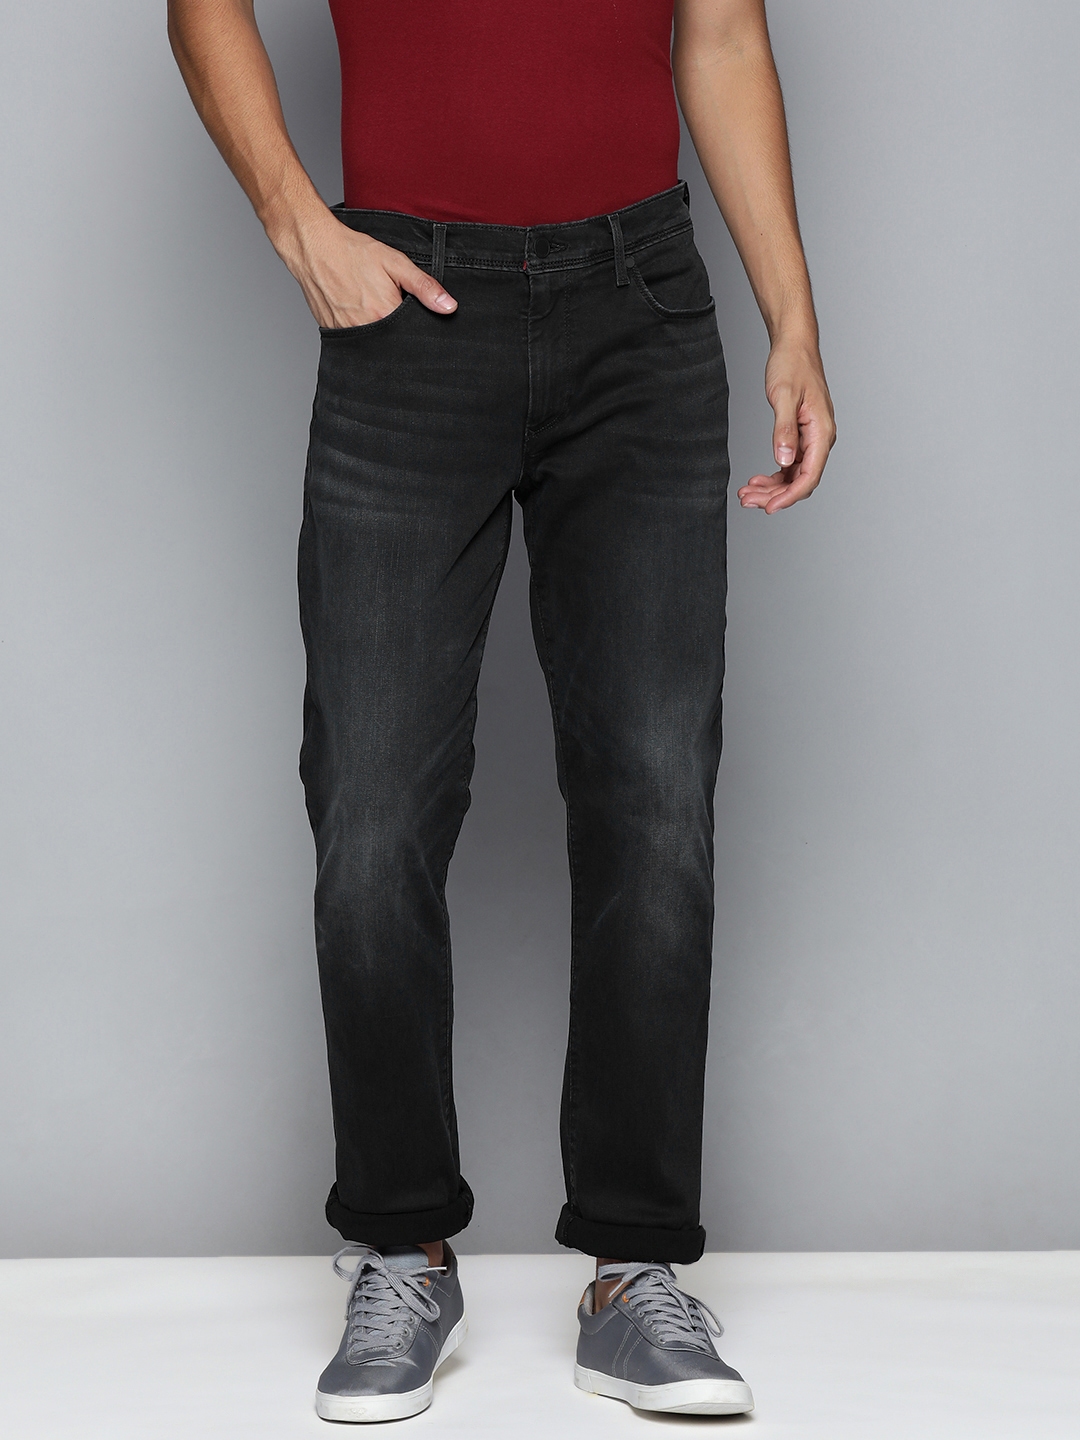 Buy Levis Men Black Slim Fit Mid Rise Light Fade Stretchable Jeans